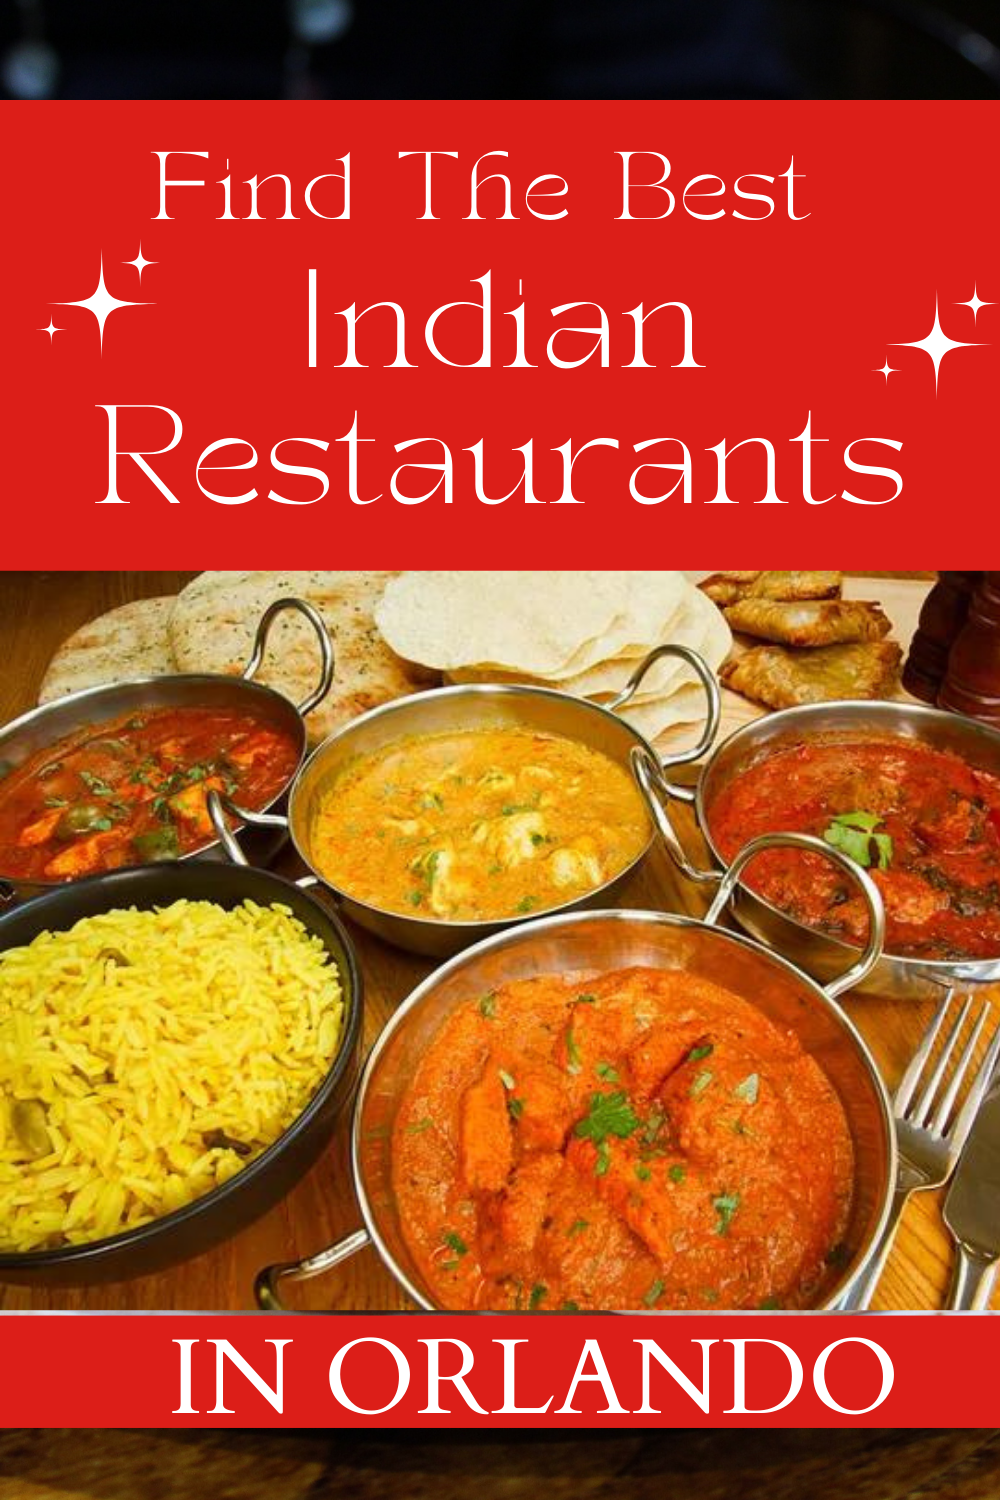 Best Indian Food in Orlando